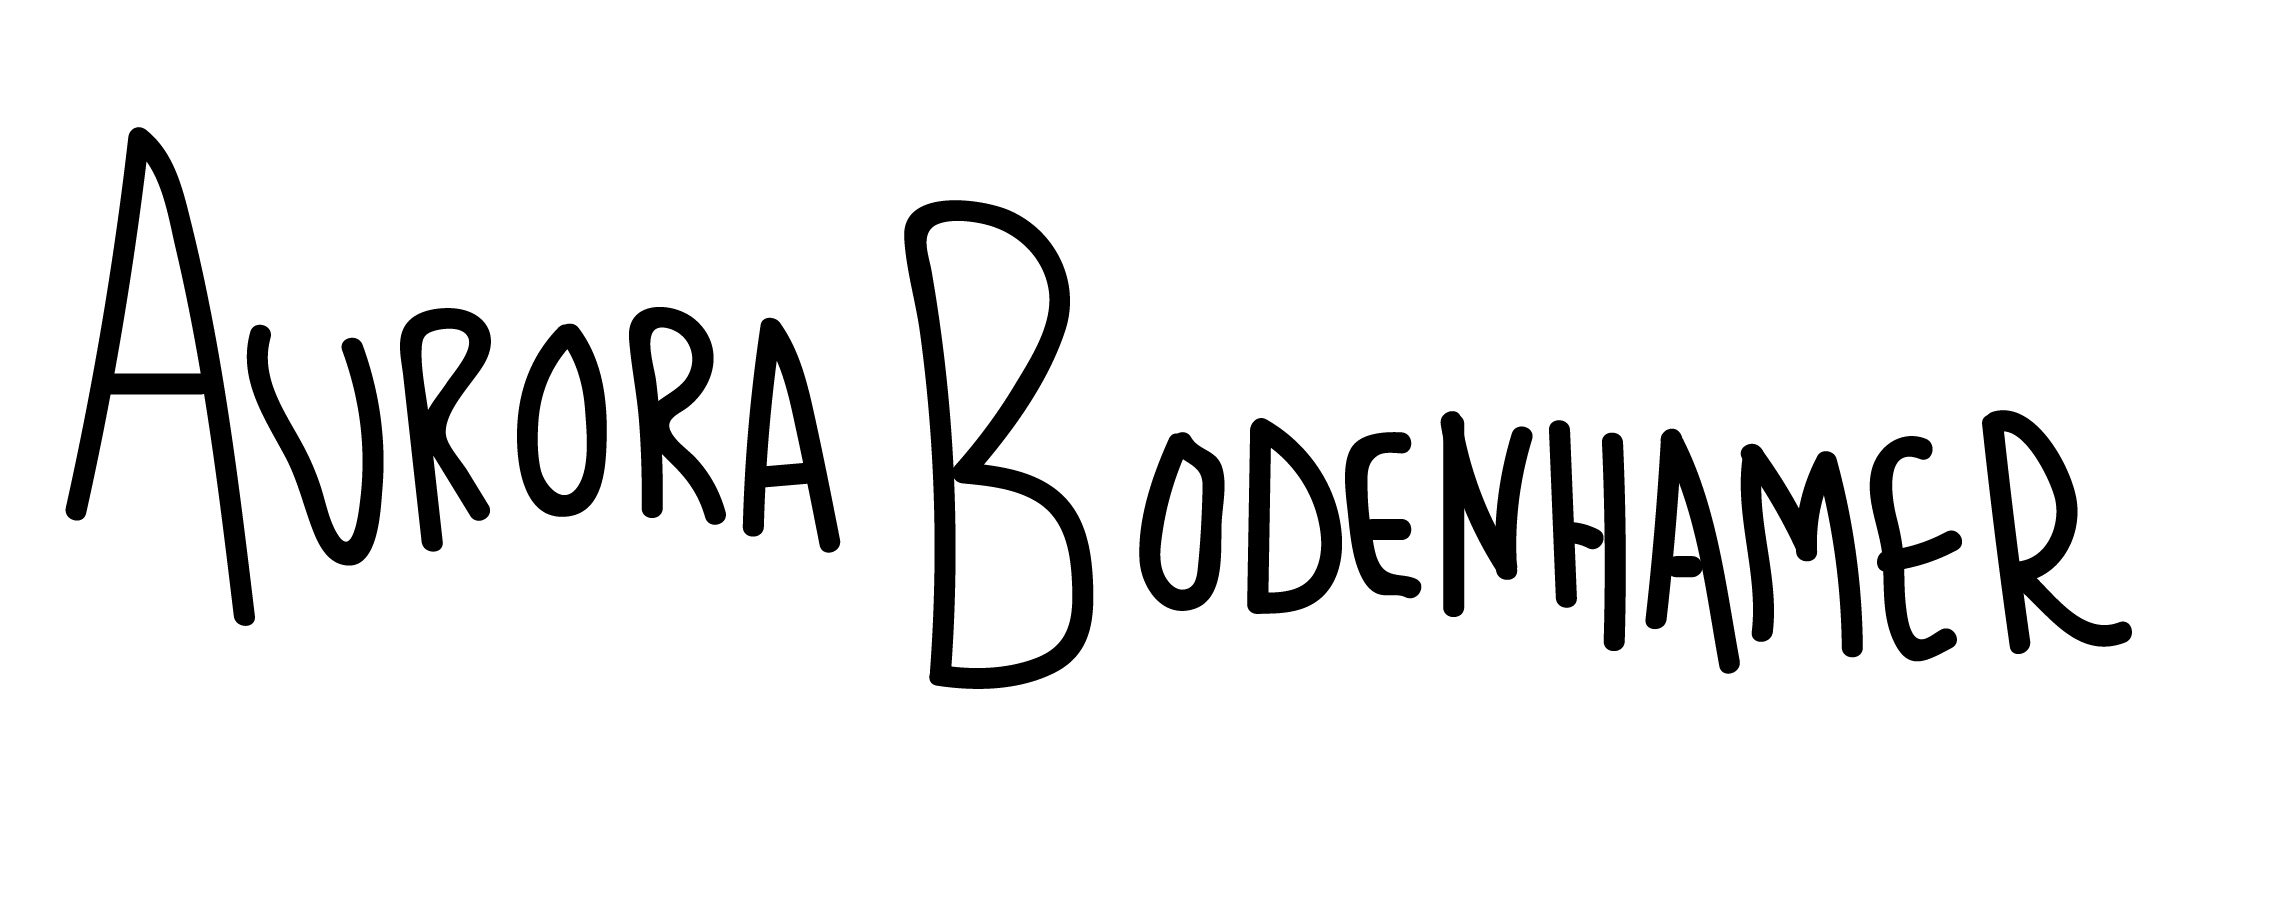 Aurora Bodenhamer